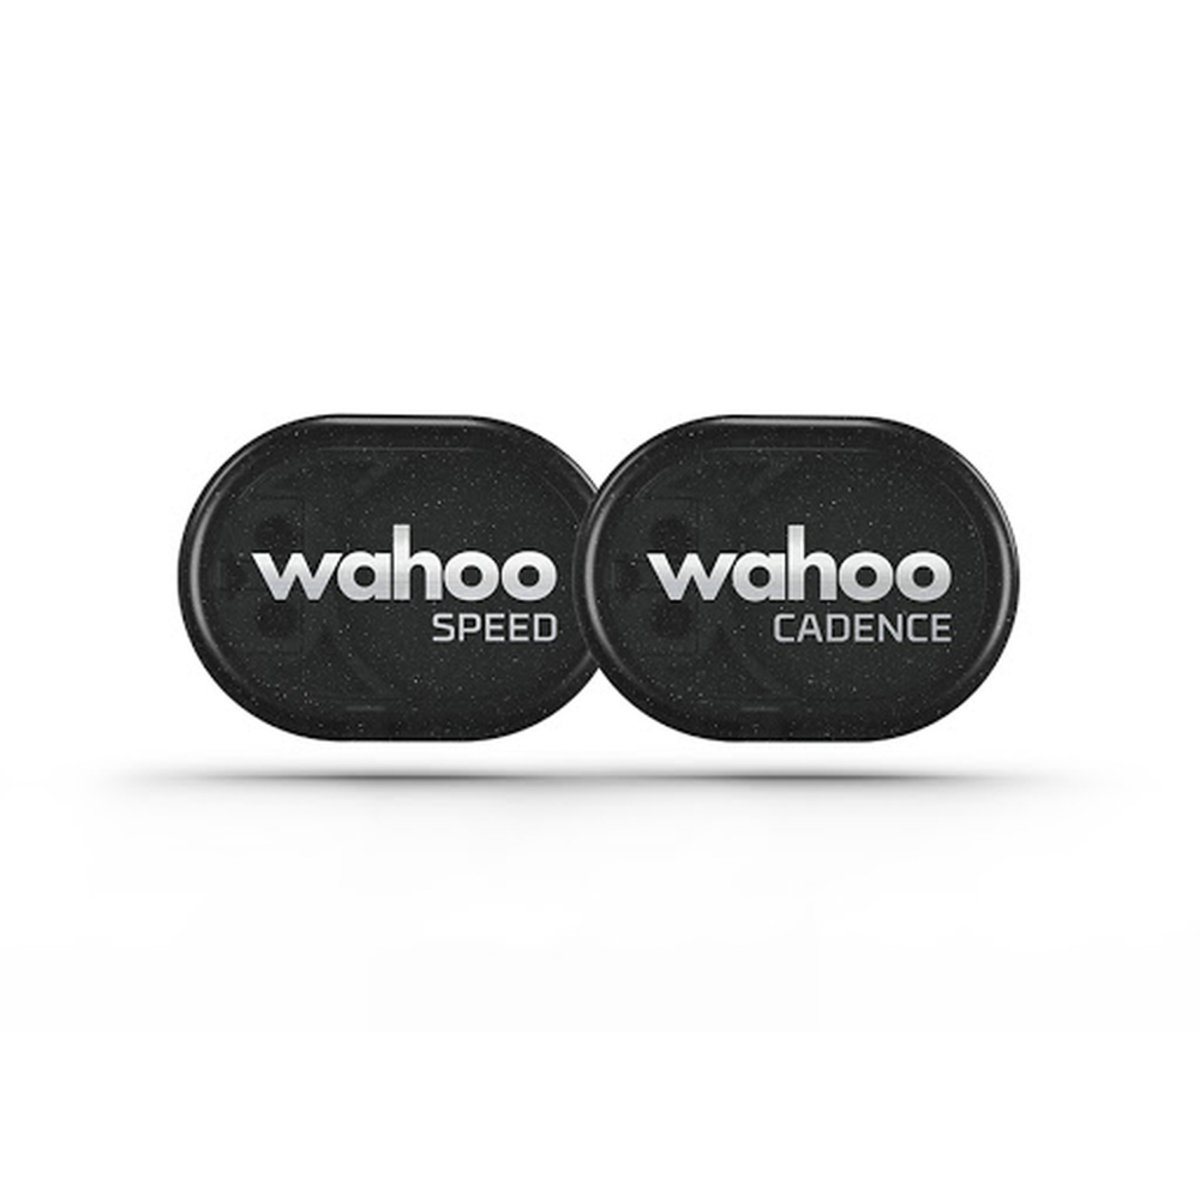 Датчики швидкості та каденсу Wahoo RPM Speed & Cadence Sensor Combo Pack (BT/ANT+) WFRPMC